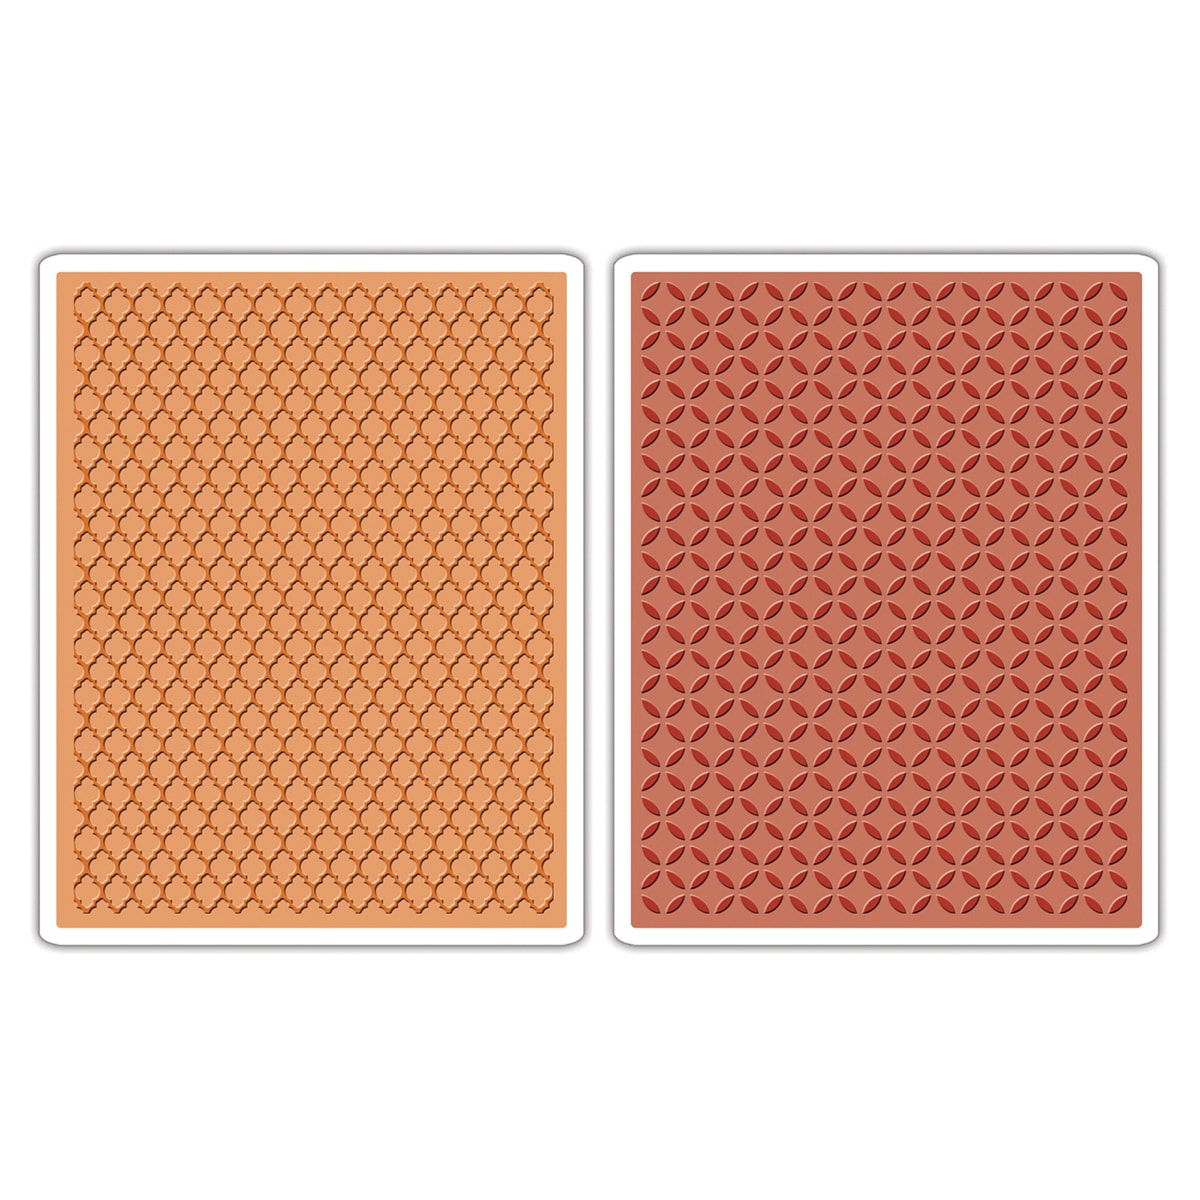 Sizzix Textured Impressions A2 Embossing Folders 2/PkgPolka Dots